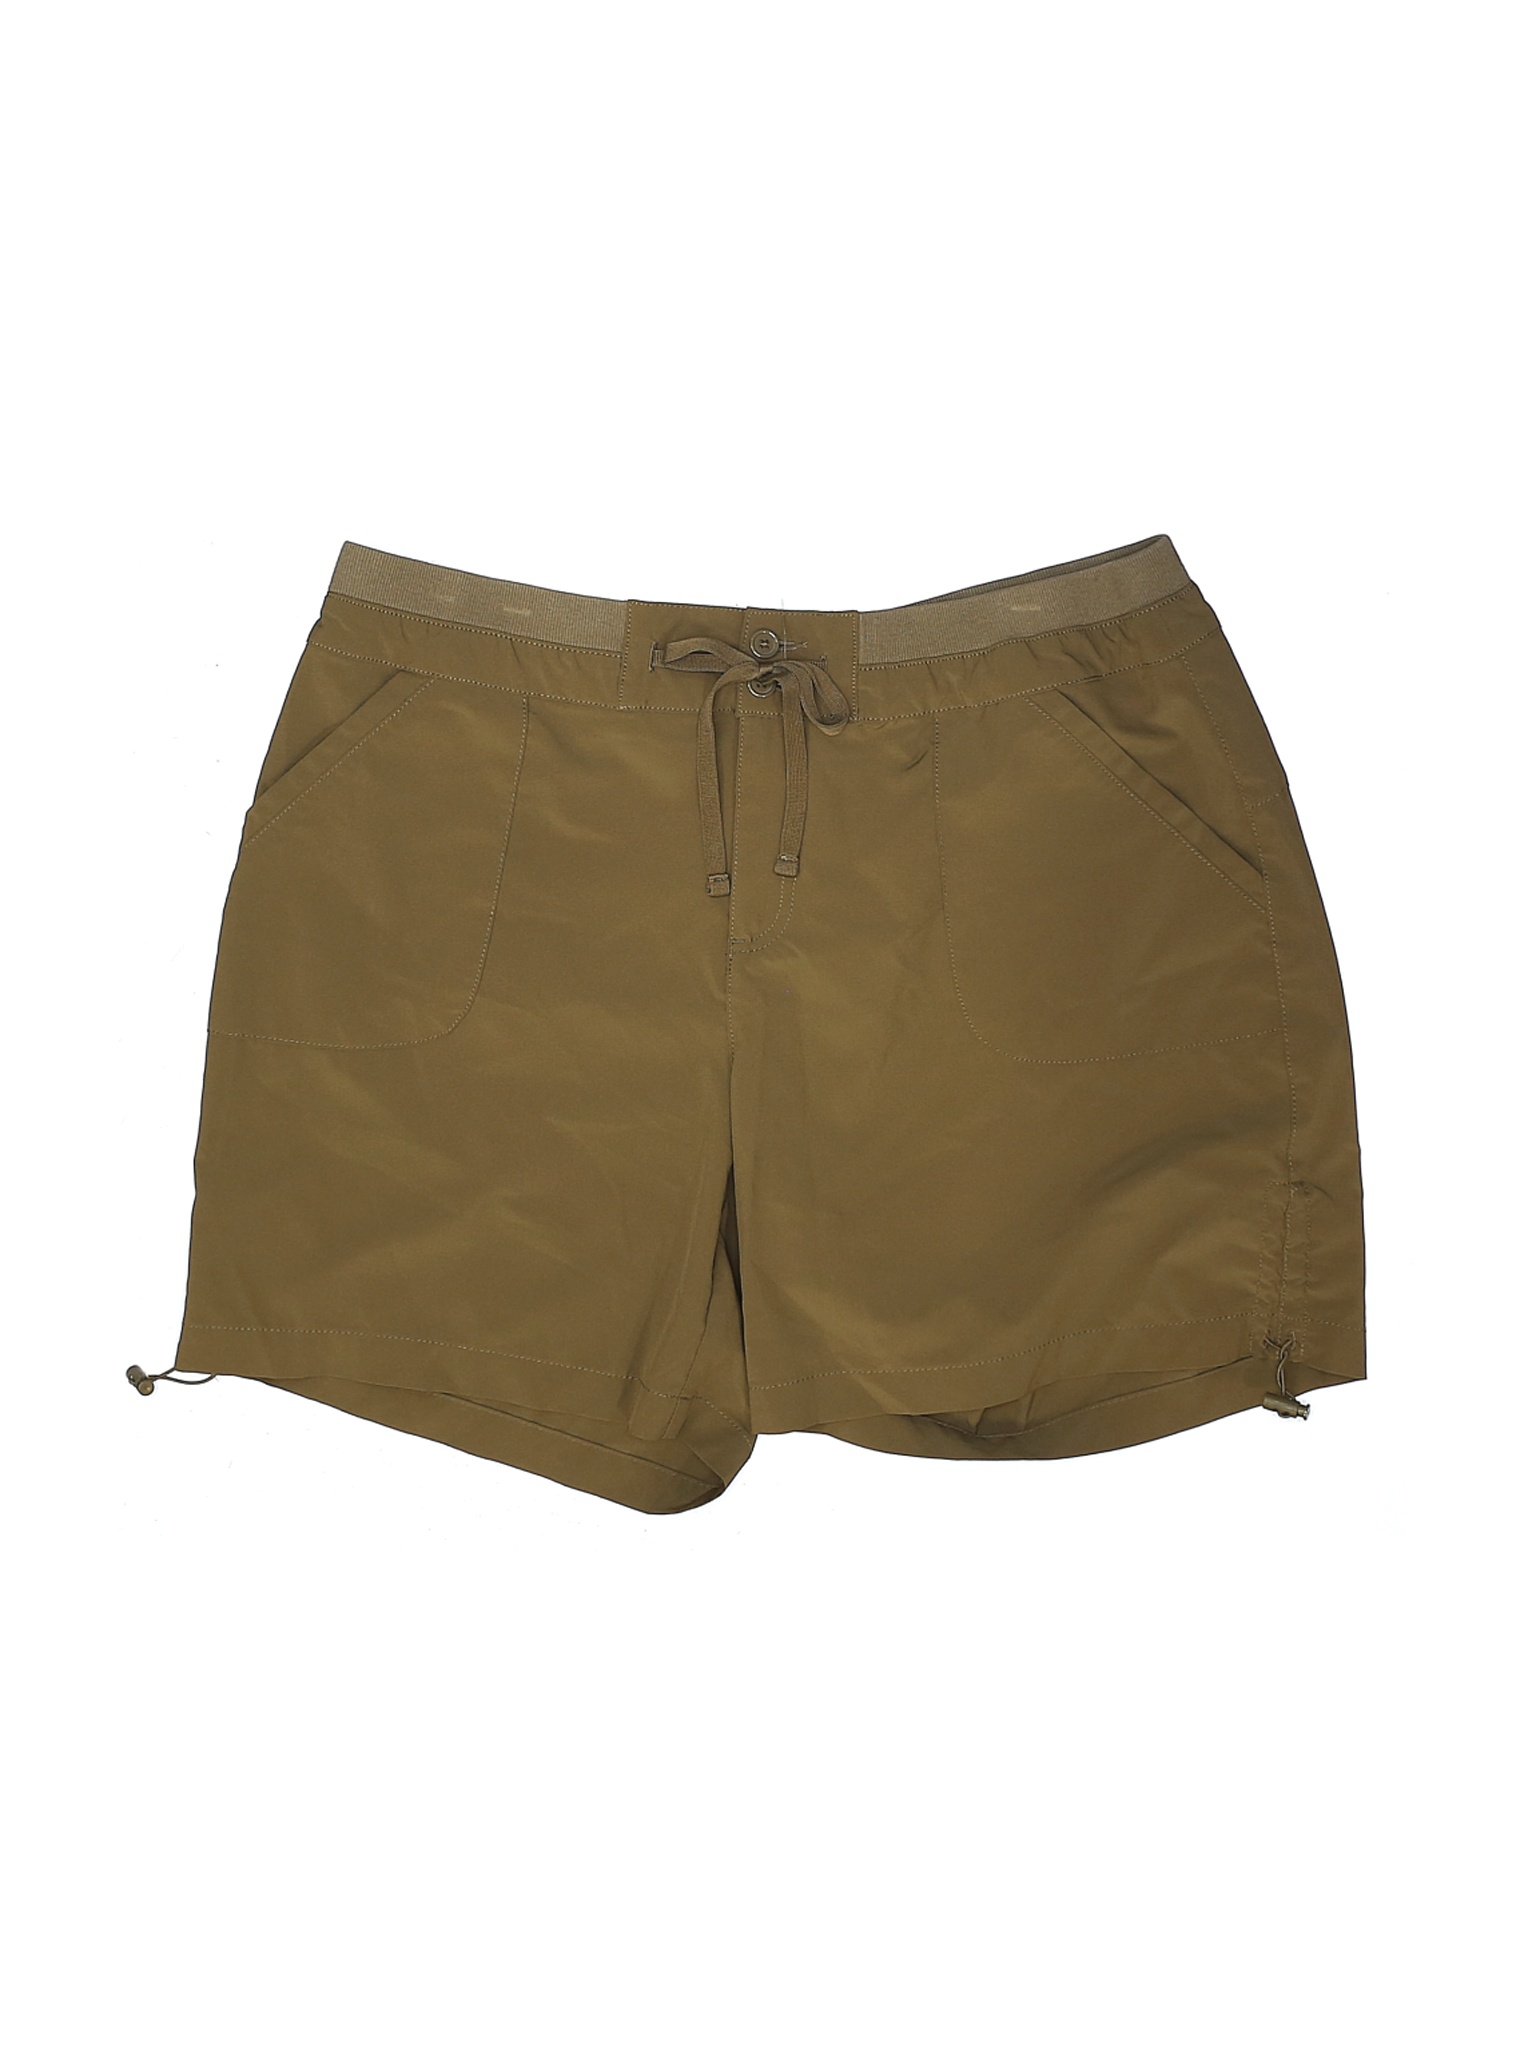 Unbranded Women Green Athletic Shorts 16 | eBay